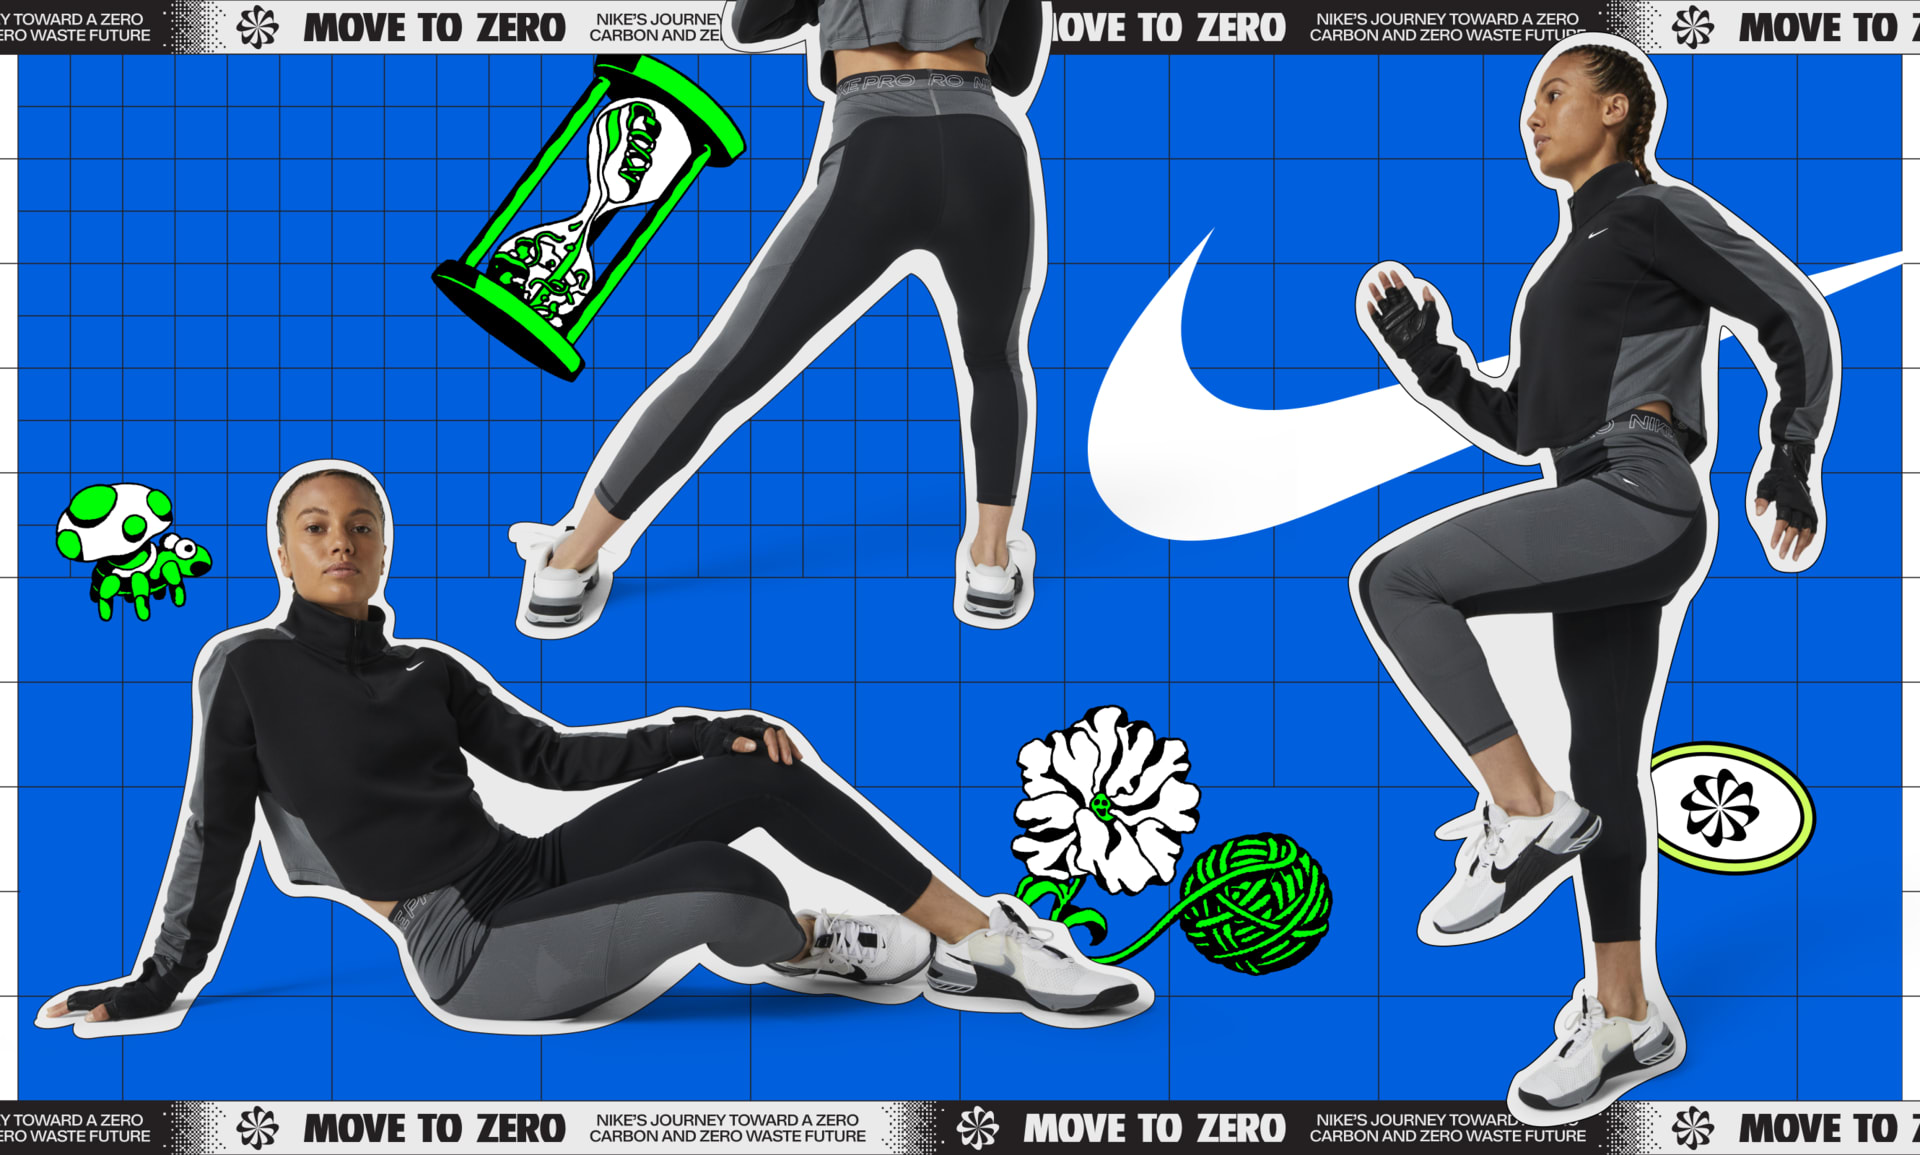 Nike Pro Warm Tight Fit 7/8 Training Gym leggings (AO9228-010)